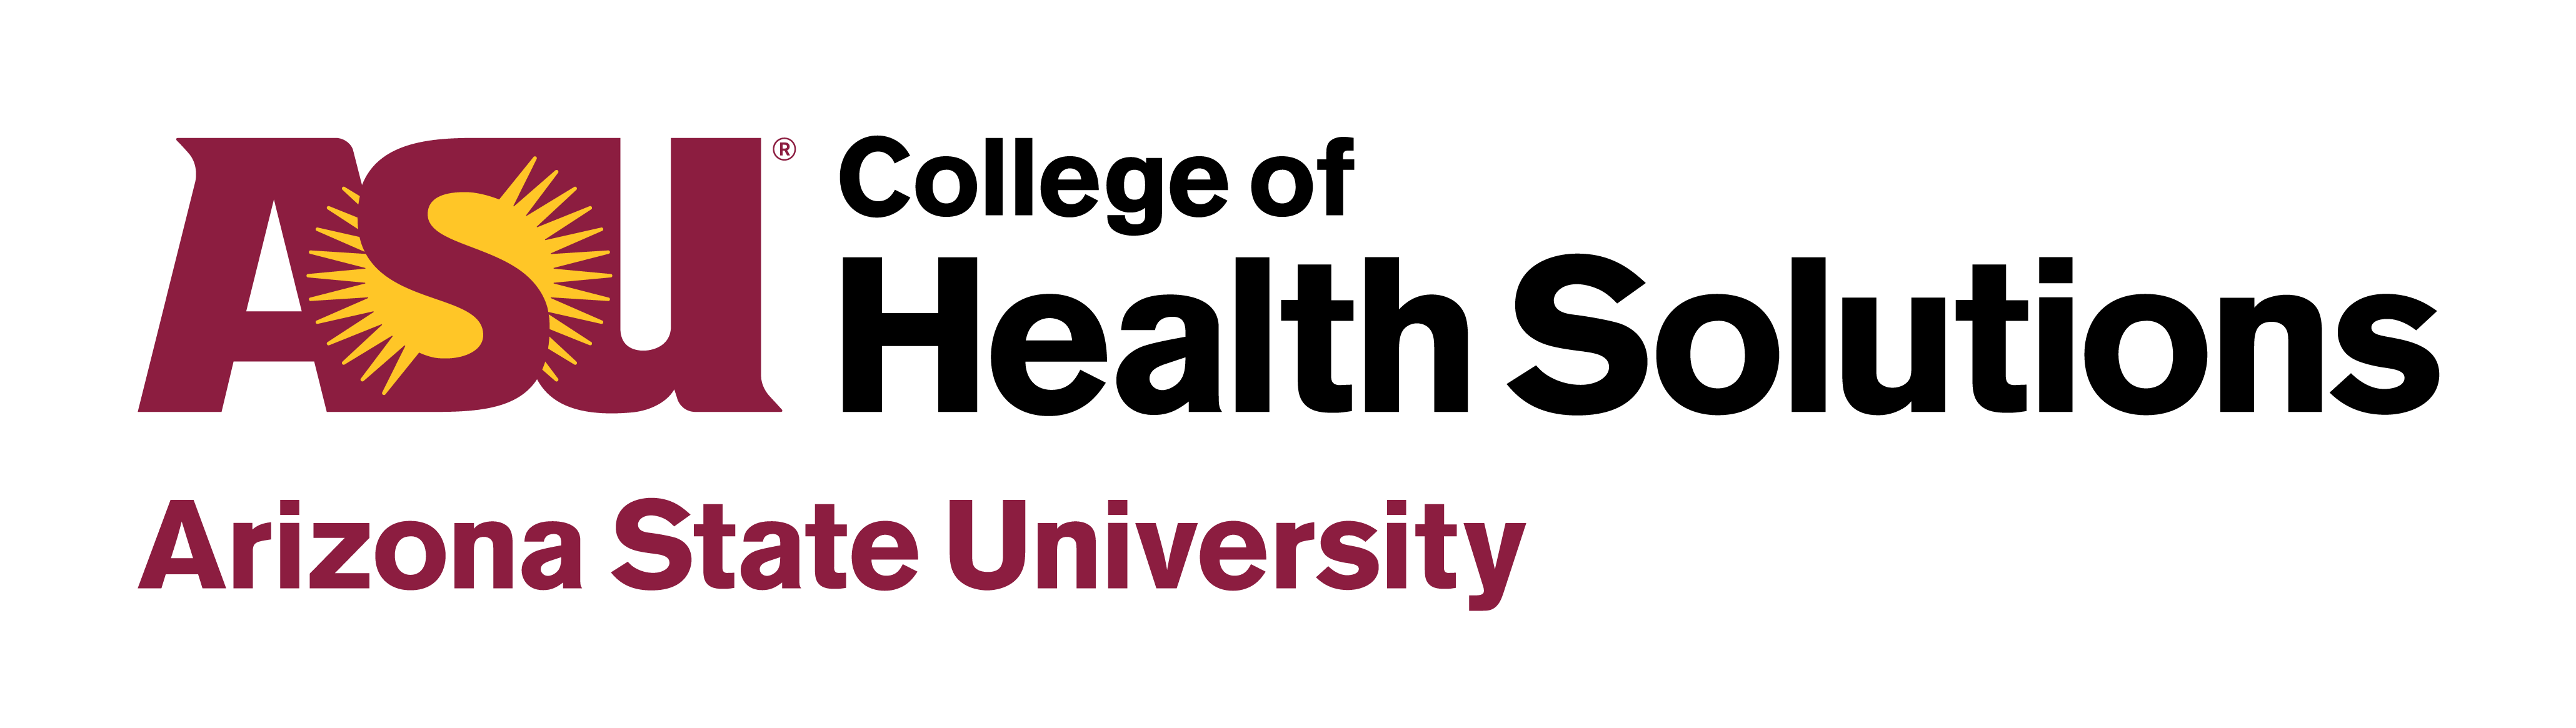 ASU College of Health Solutions logo